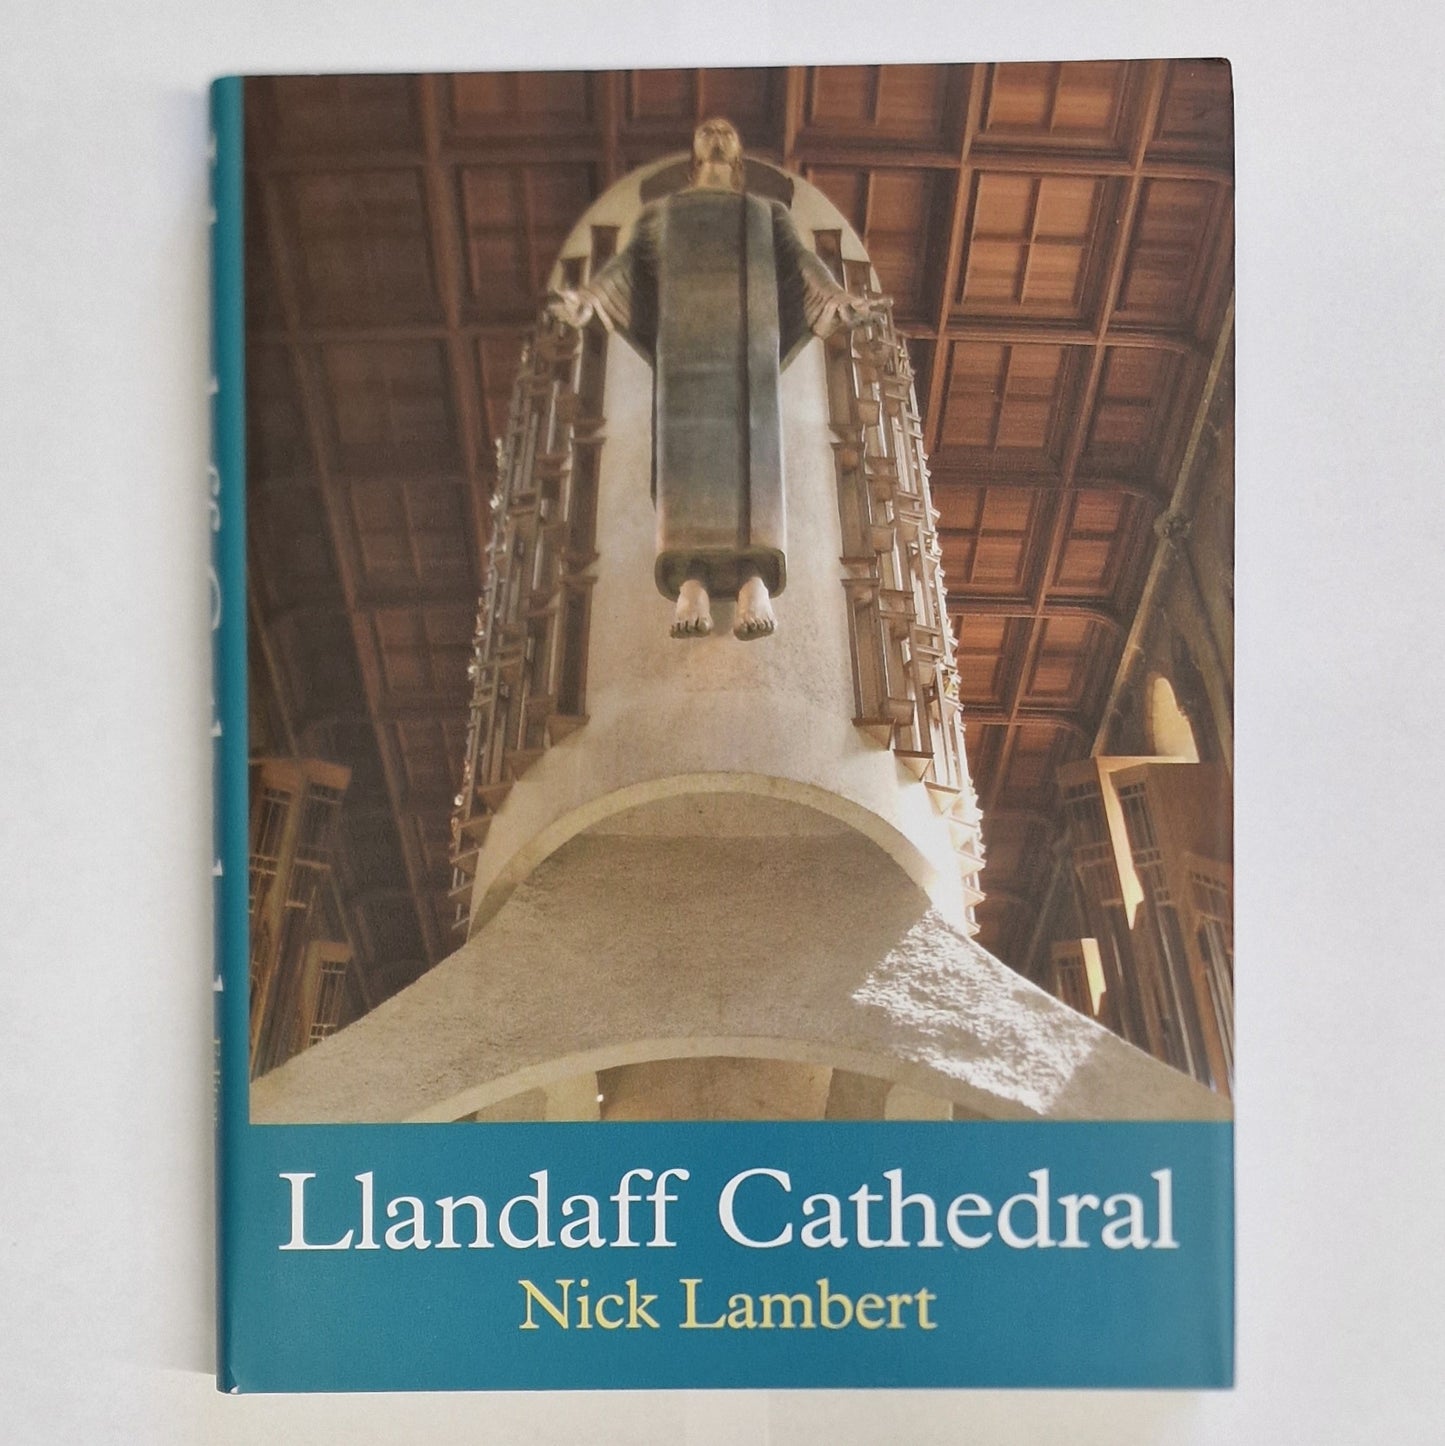 Llandaff Cathedral by Nick Lambert